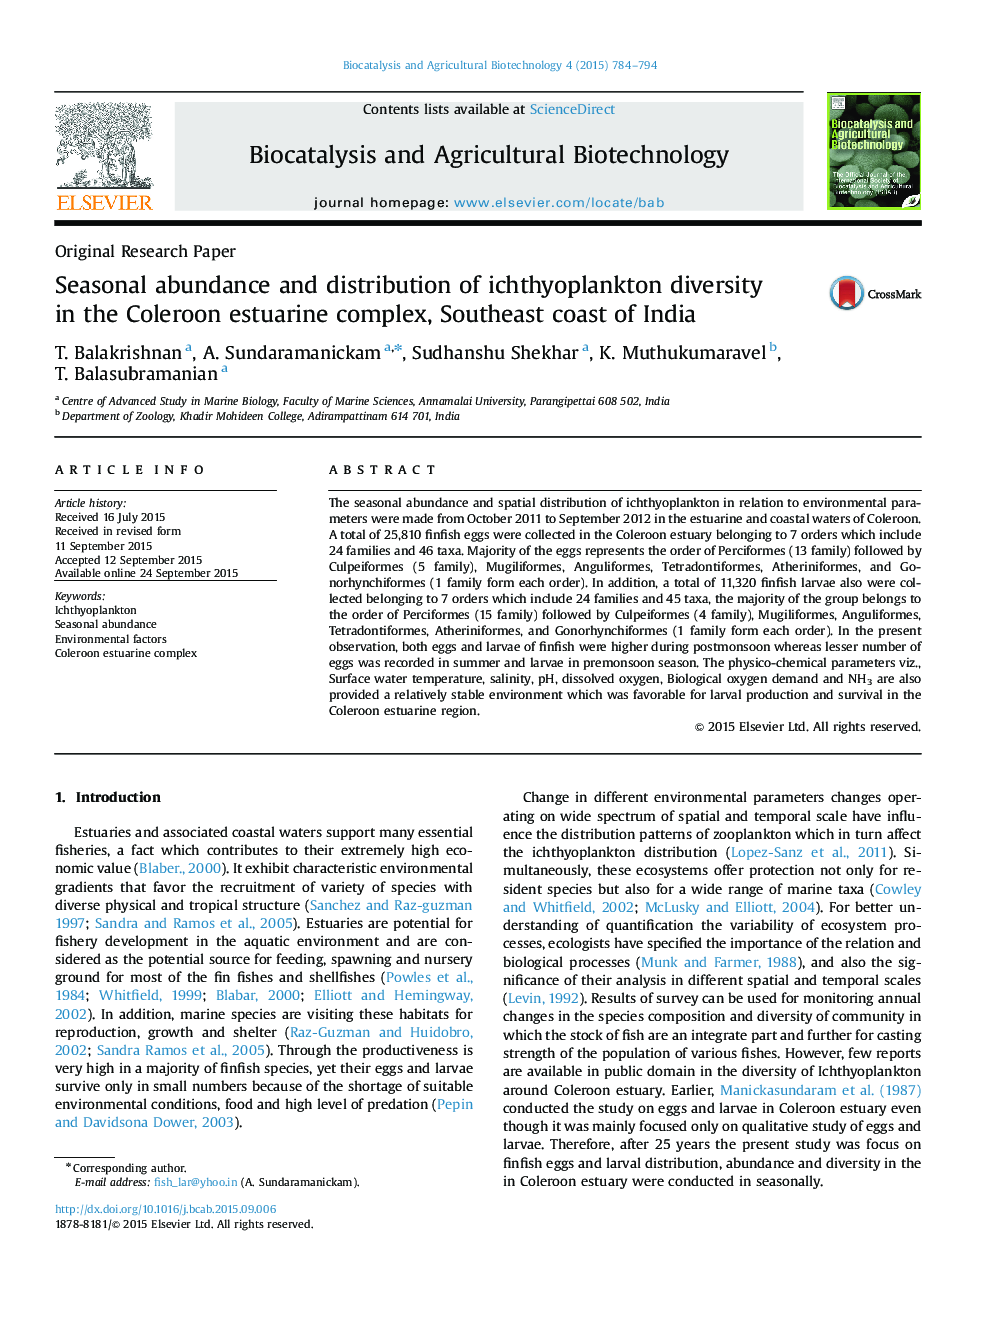 Seasonal abundance and distribution of ichthyoplankton diversity in the Coleroon estuarine complex, Southeast coast of India